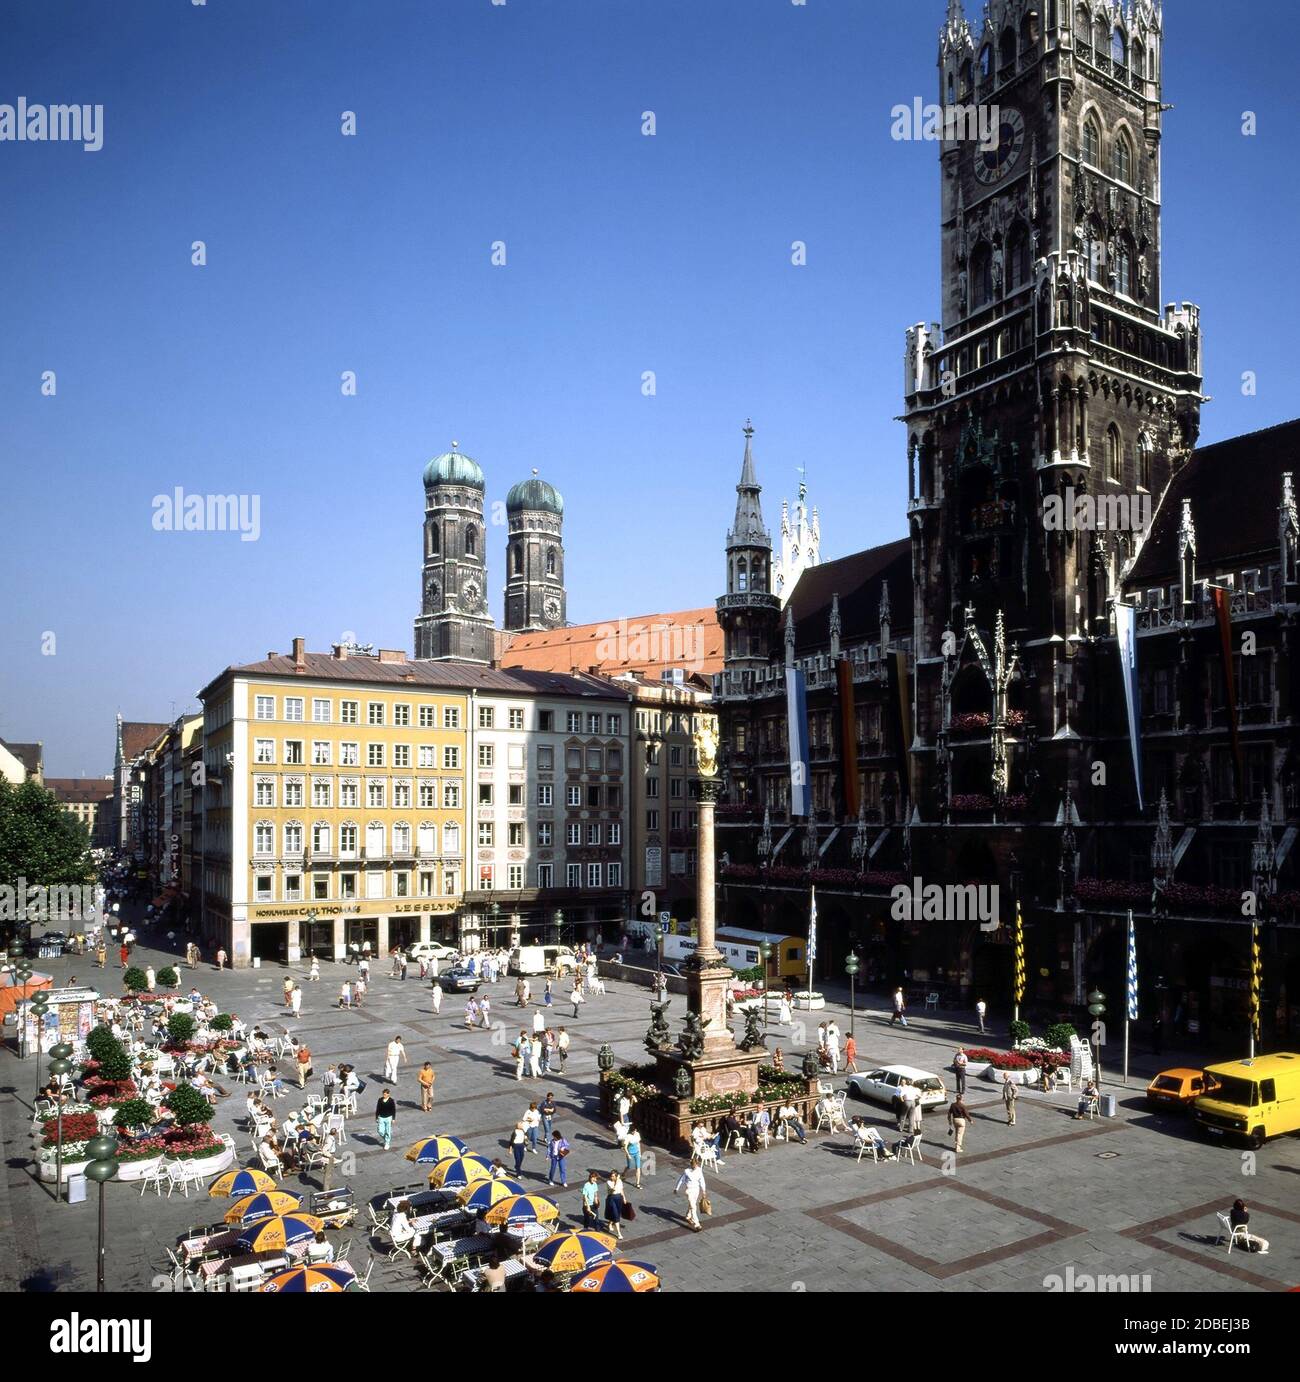 Marienplatz in Munich, Germany Stock Photo